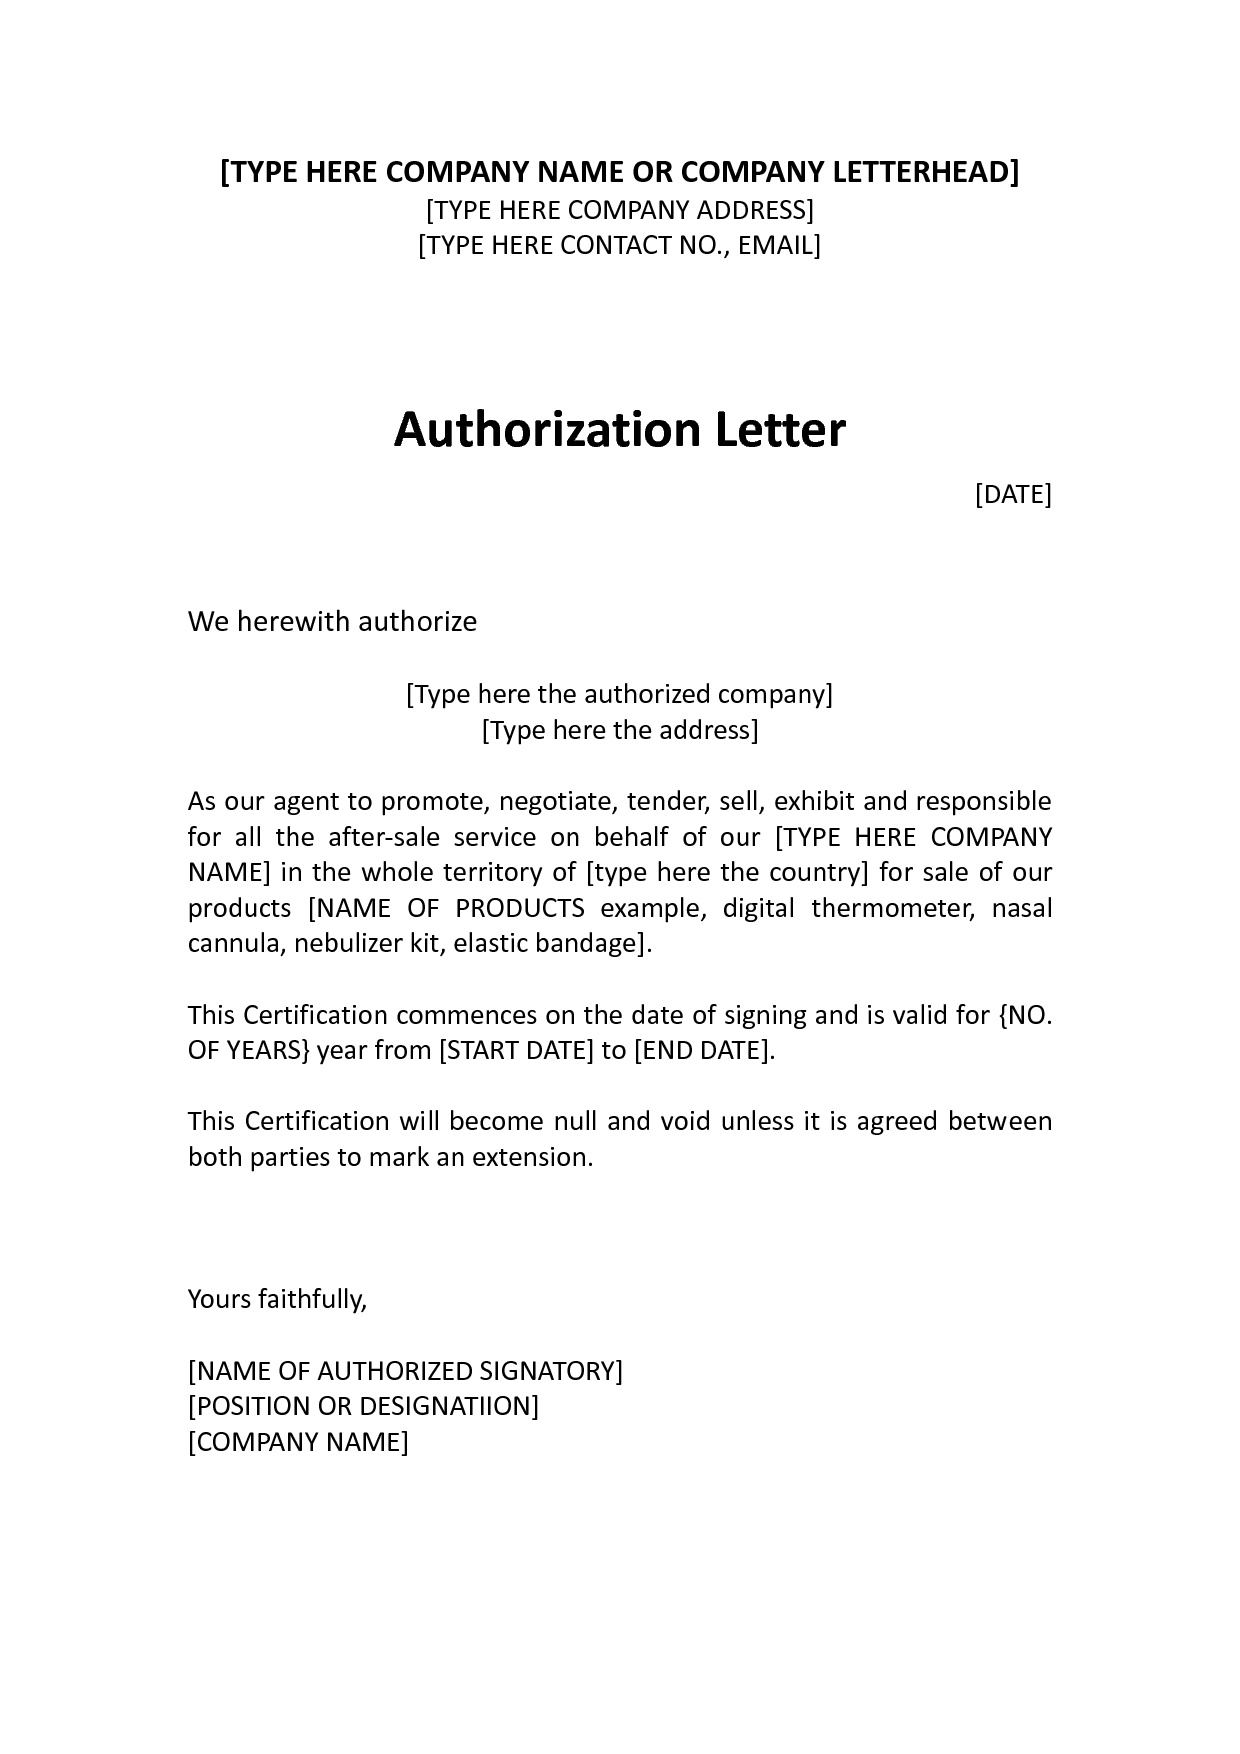 Medical Consent Letter Template - Authorization Distributor Letter Sample Distributor Dealer